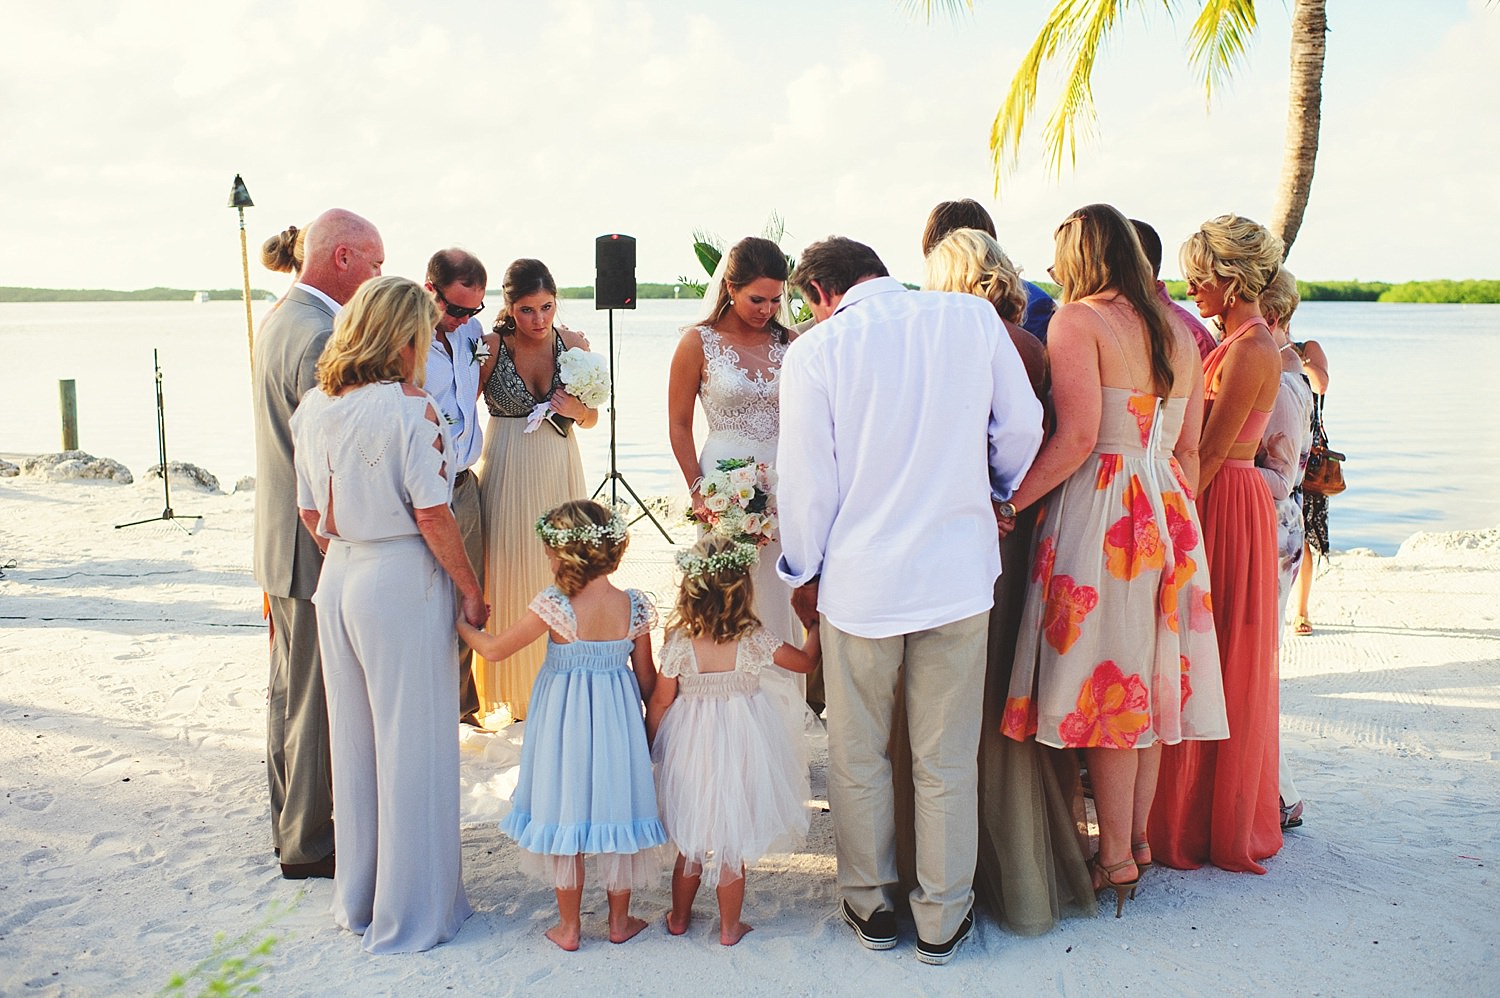 pierre's restaurant wedding: family praying